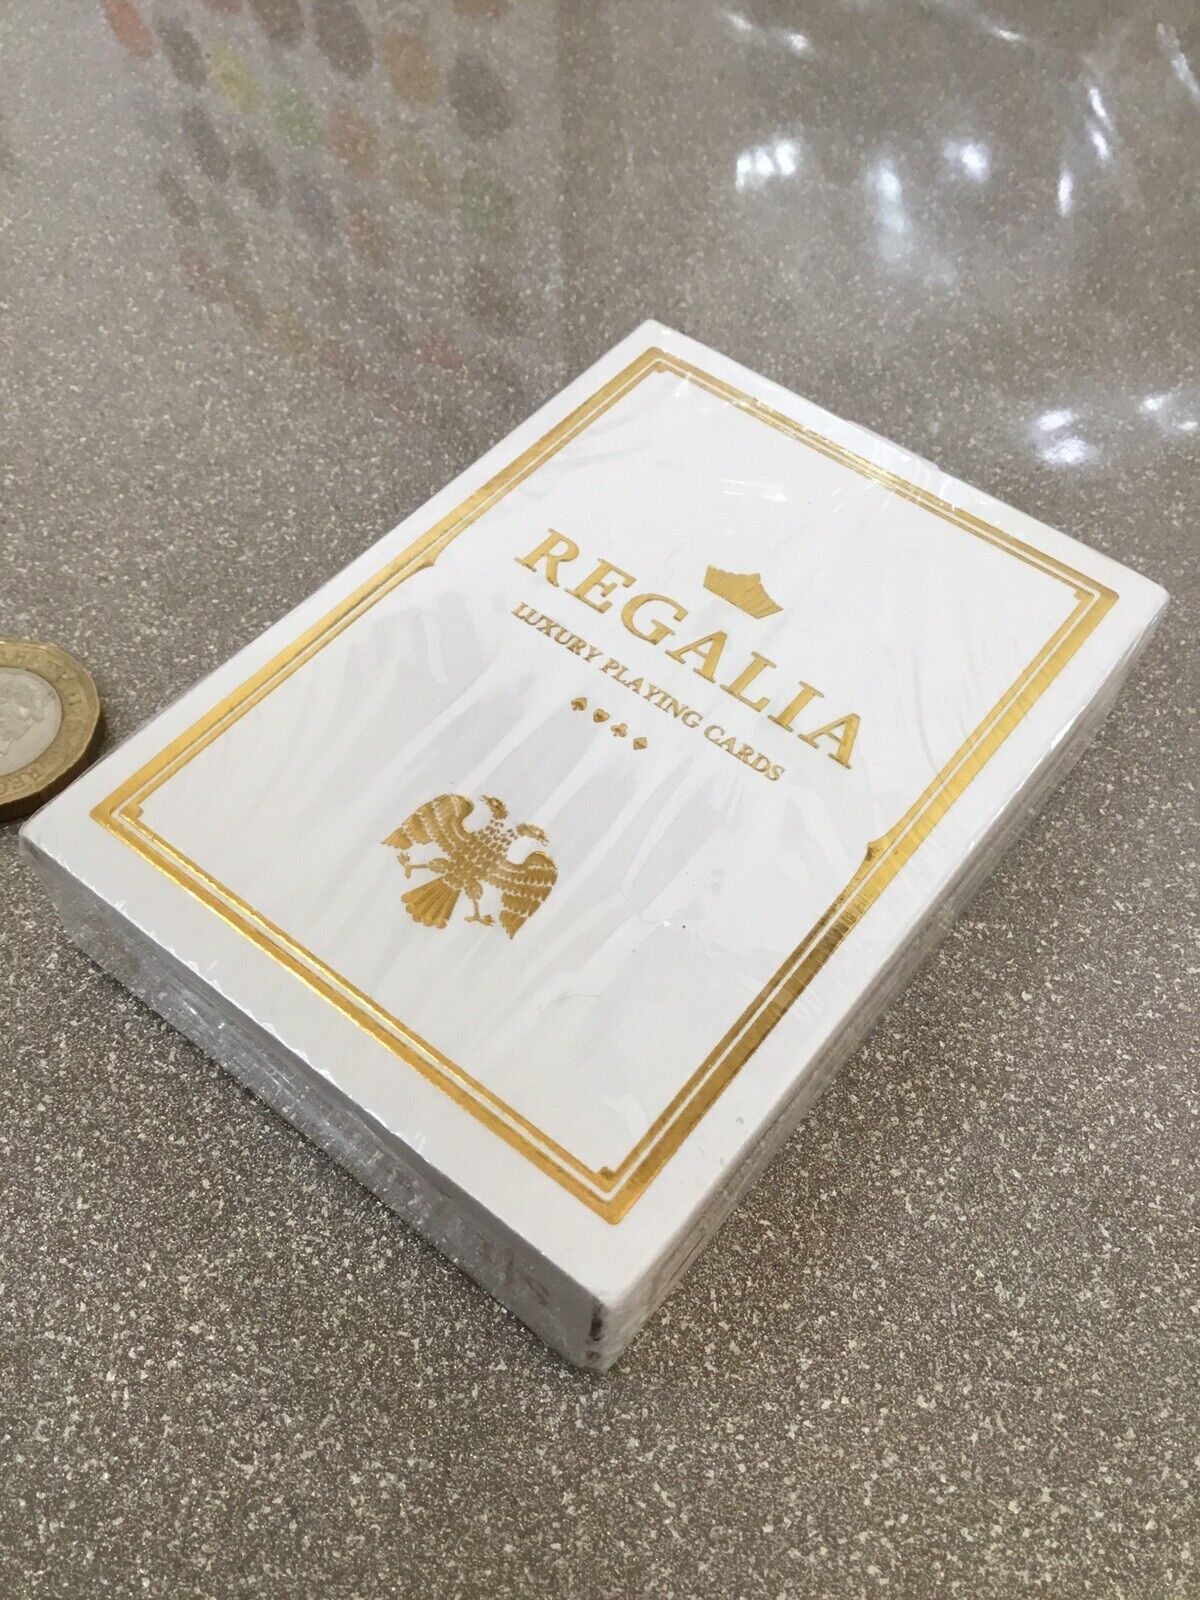 Regalia White Gold Luxury Playing Cards Deck Shin Lim New Sealed By Nick Vlow